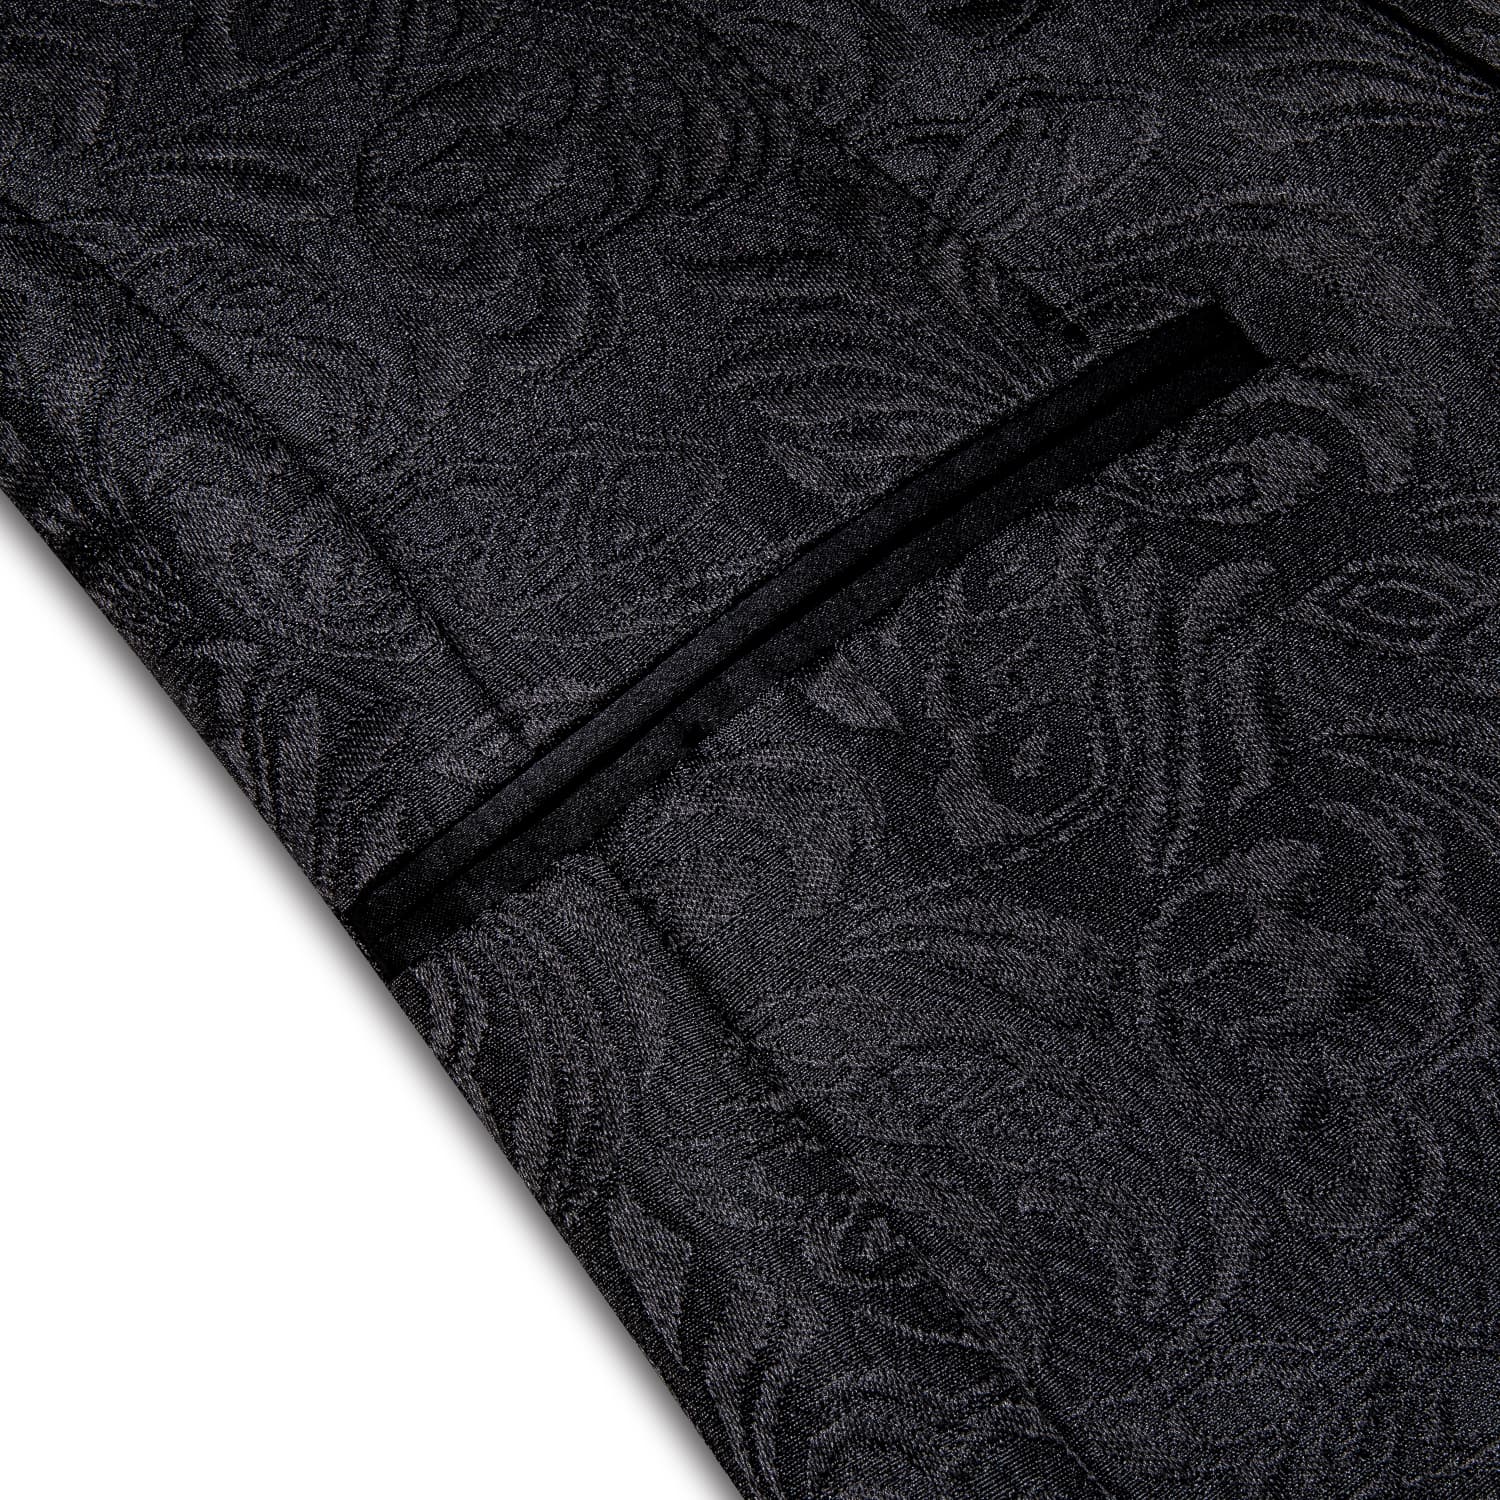 Hi-Tie Black Shawl Collar Black Floral Blazer Bowtie Suit Set